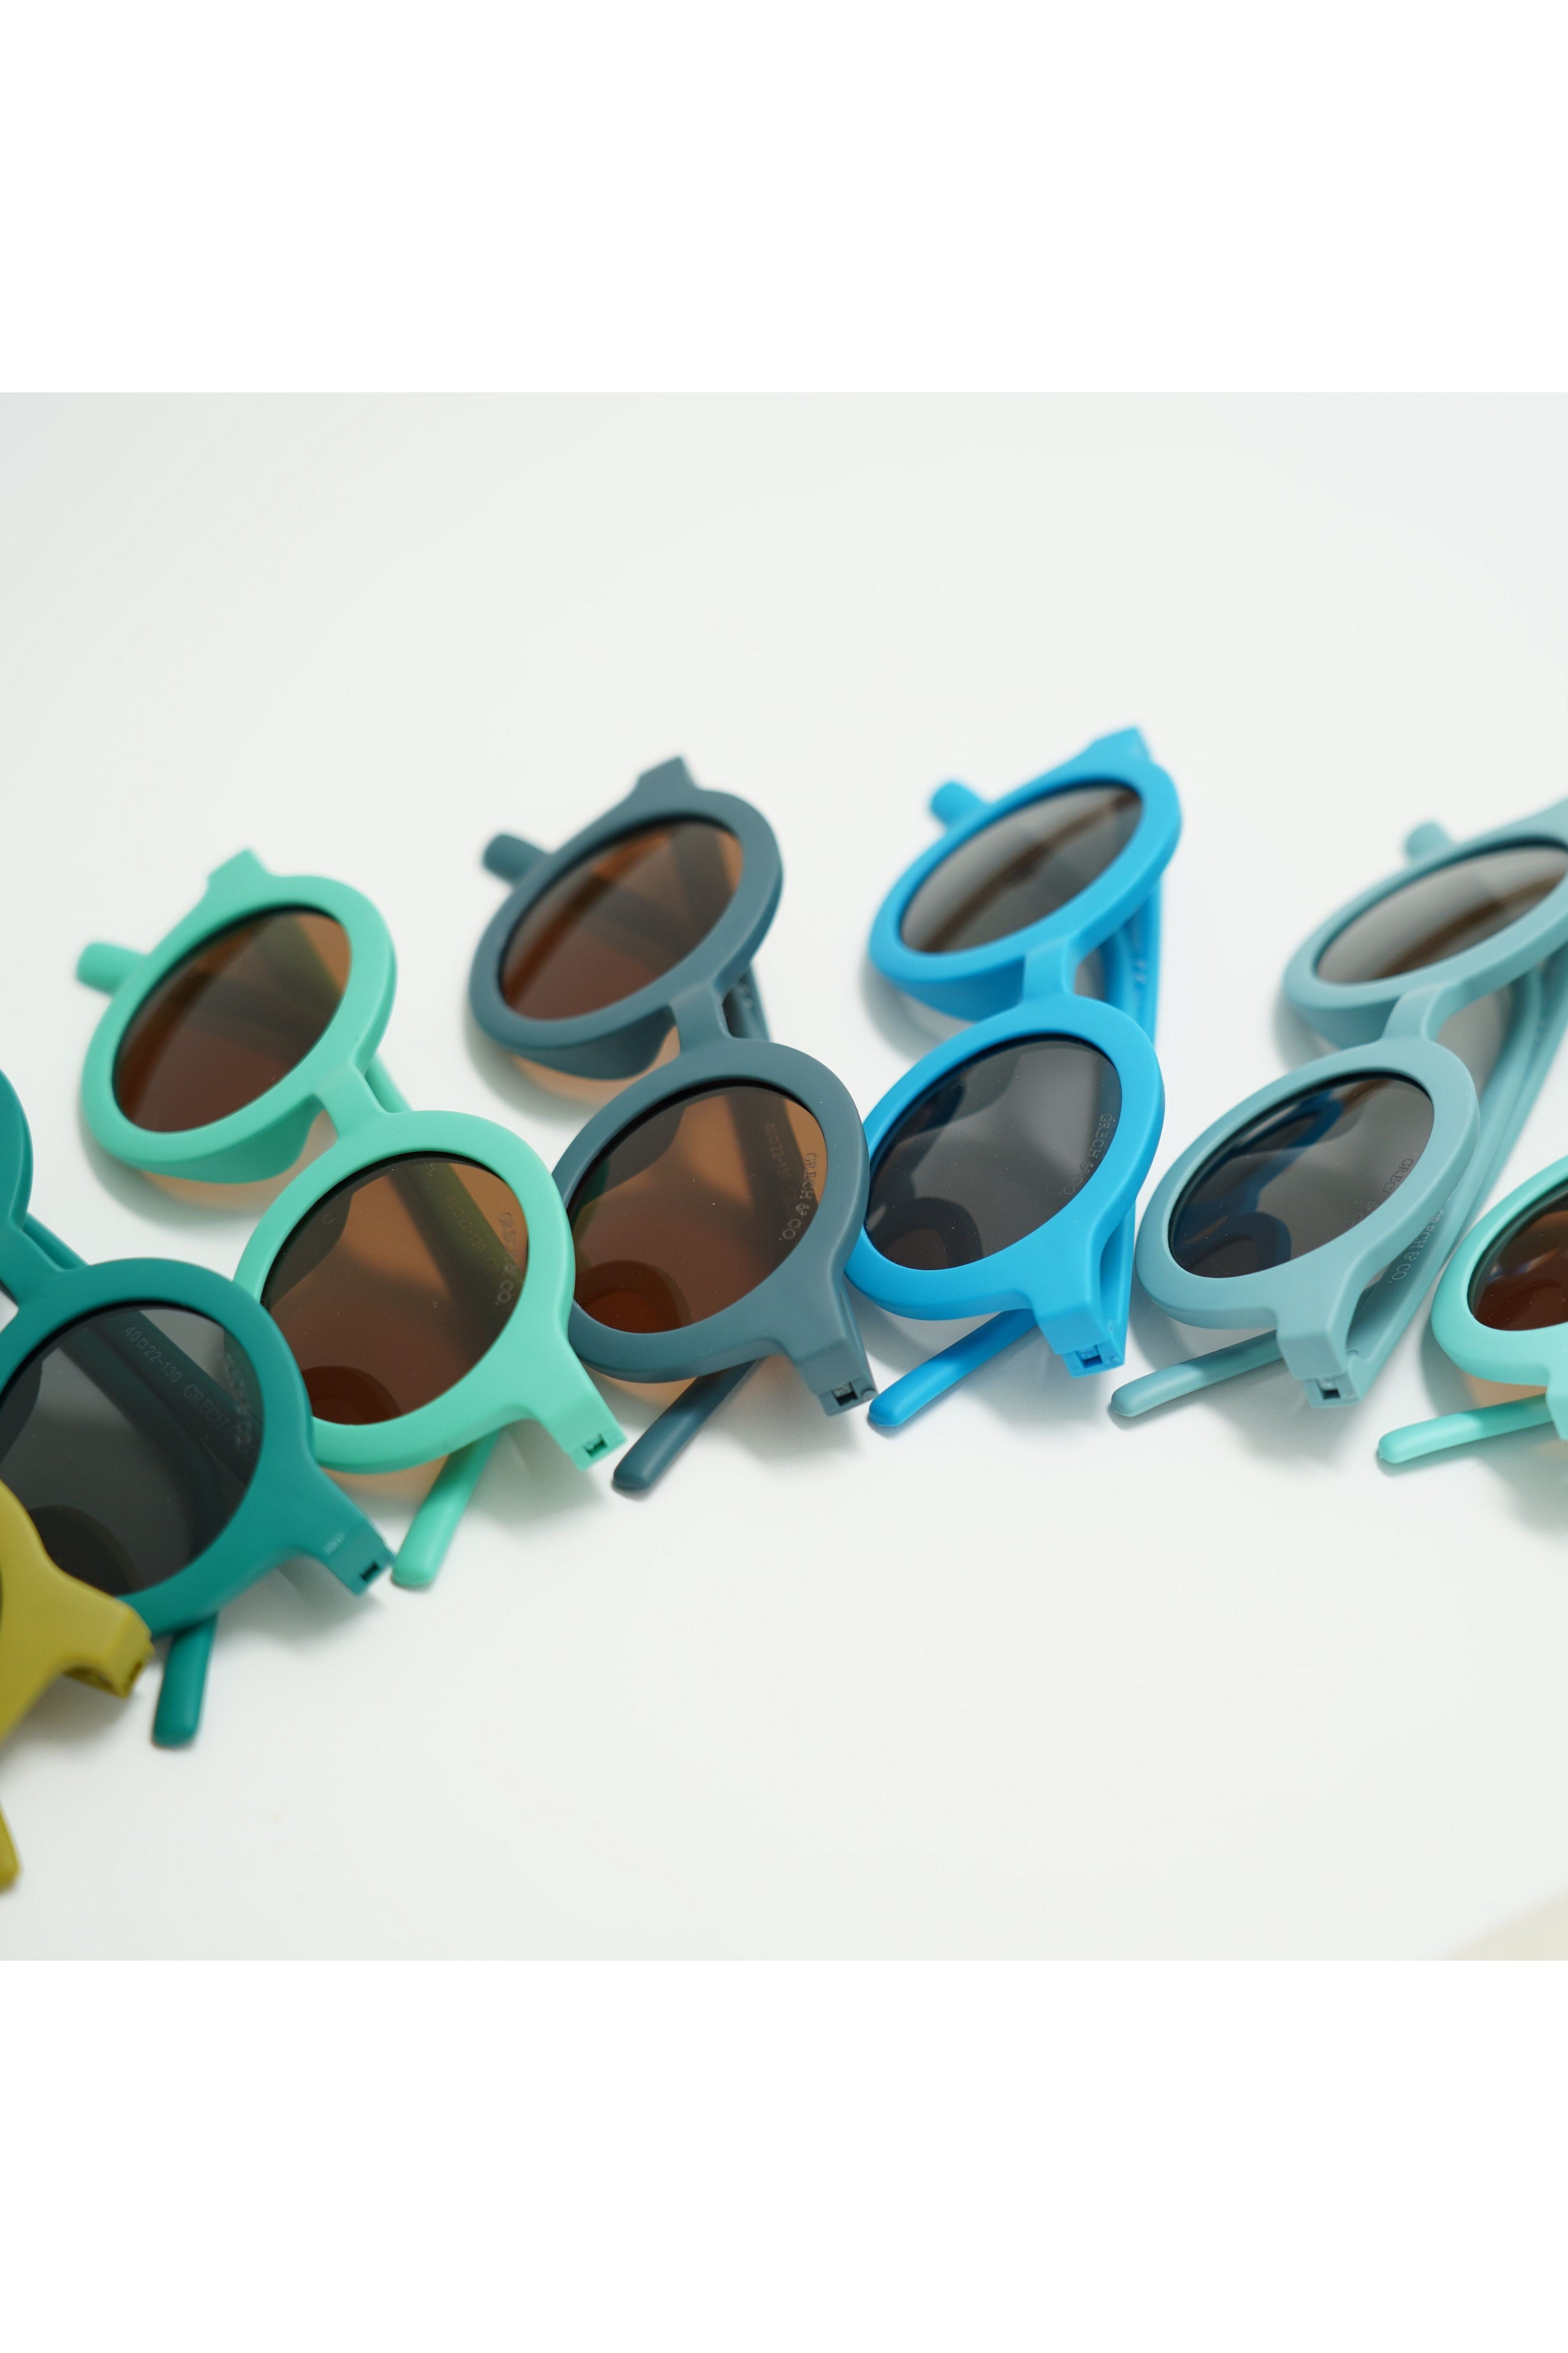 Kids New Round Polarized Sunglasses - Aqua